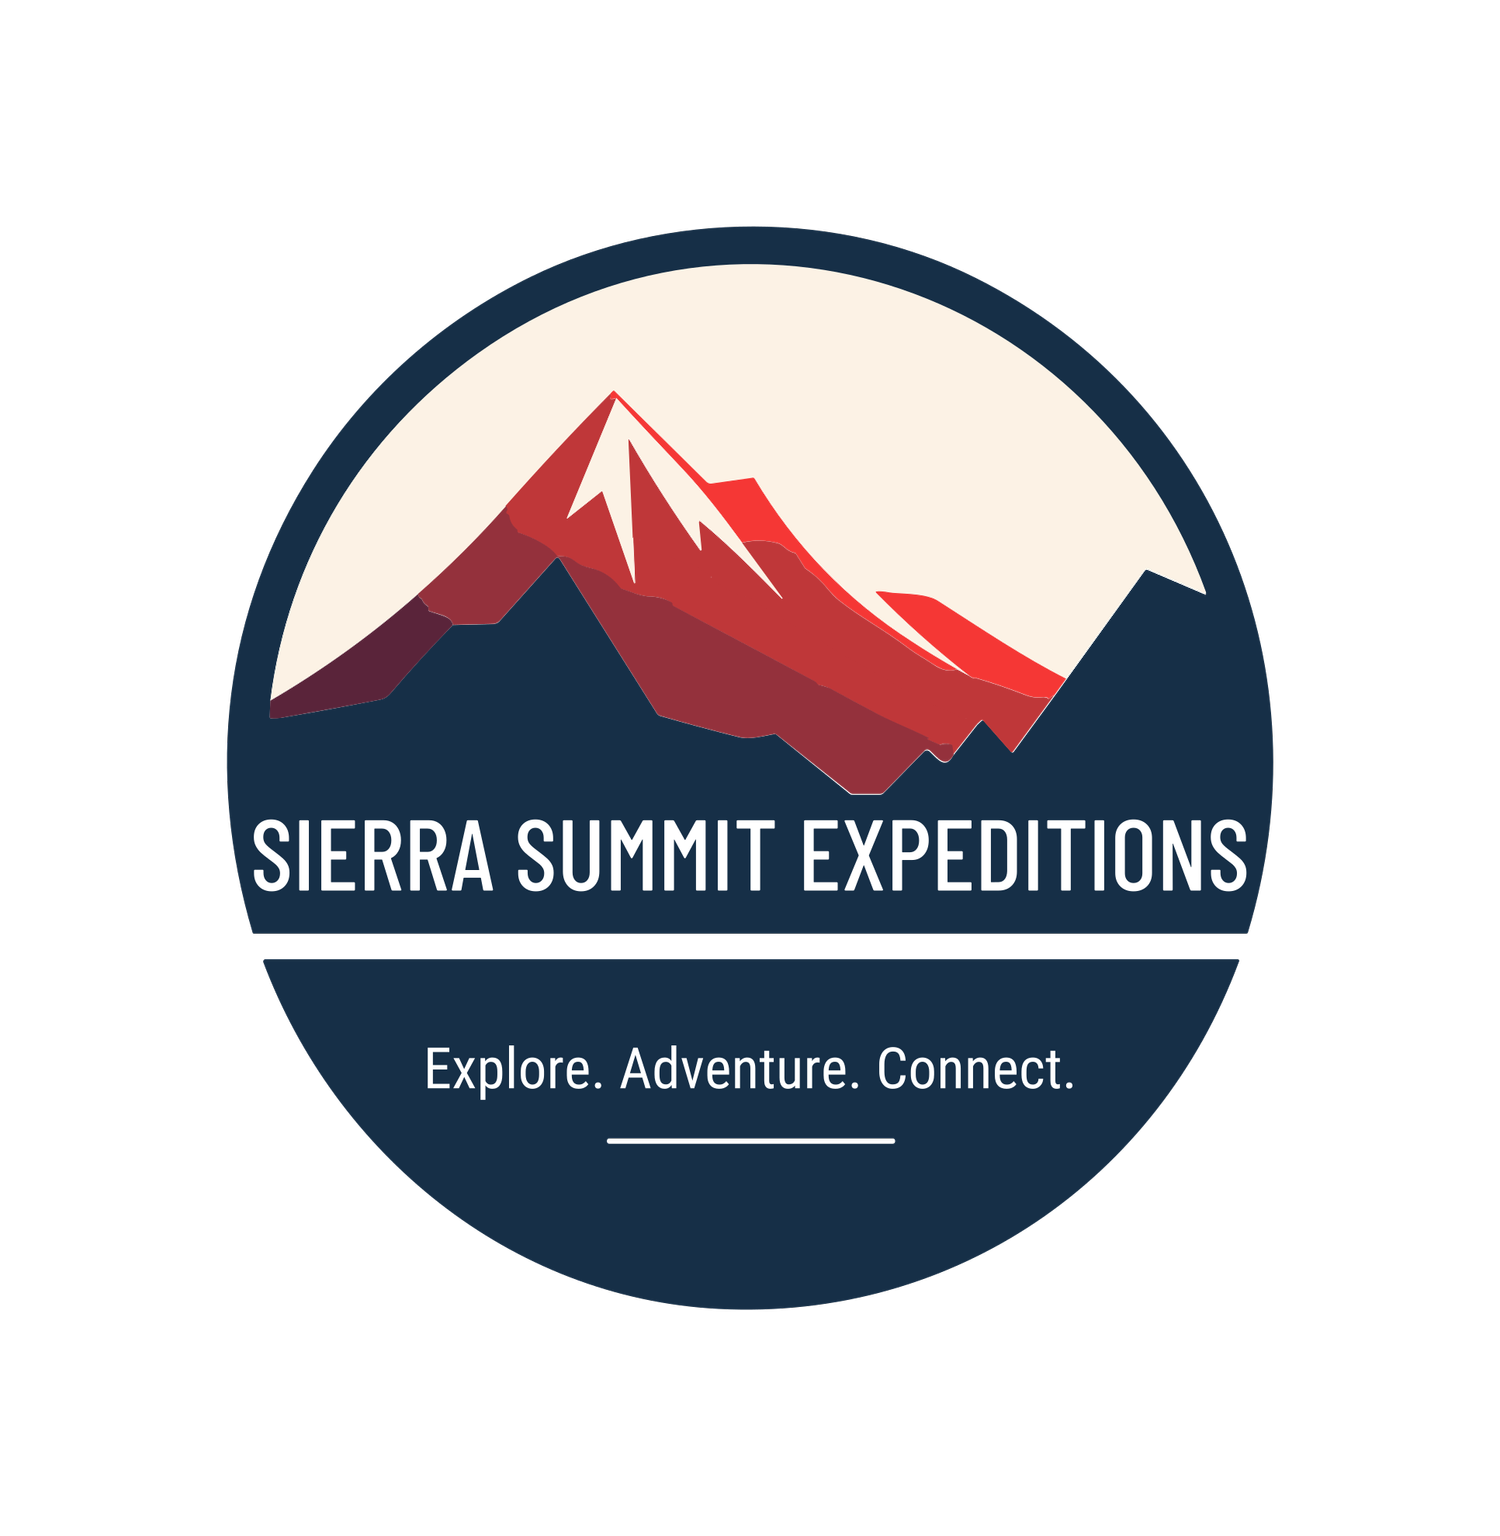 Sierra Summit Expeditions